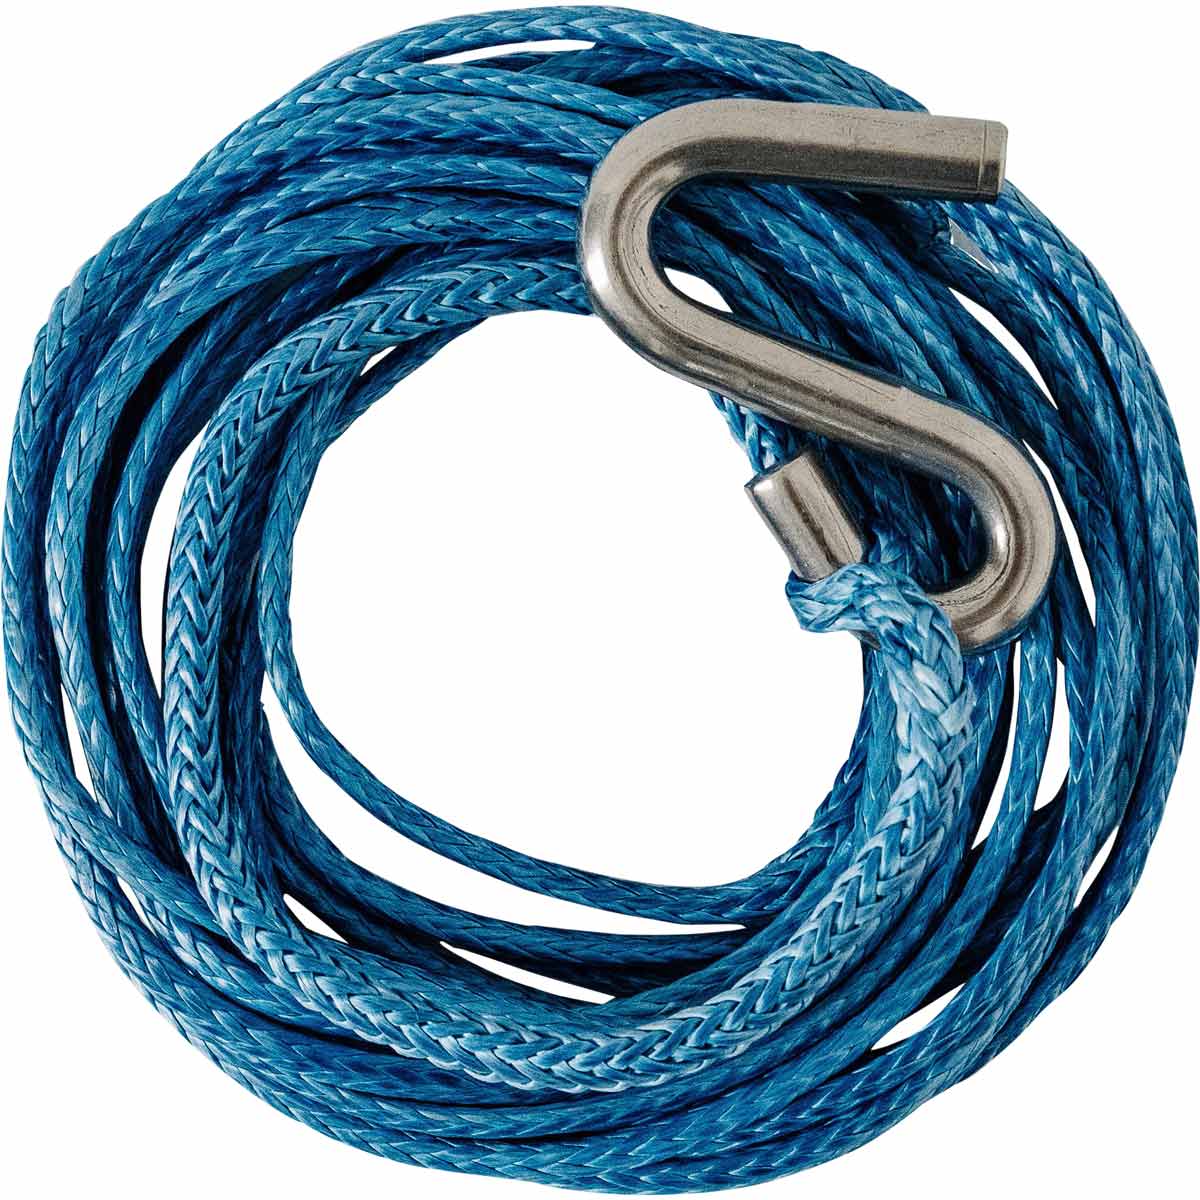 Atlantic S Hook Rope 6m x 4mm